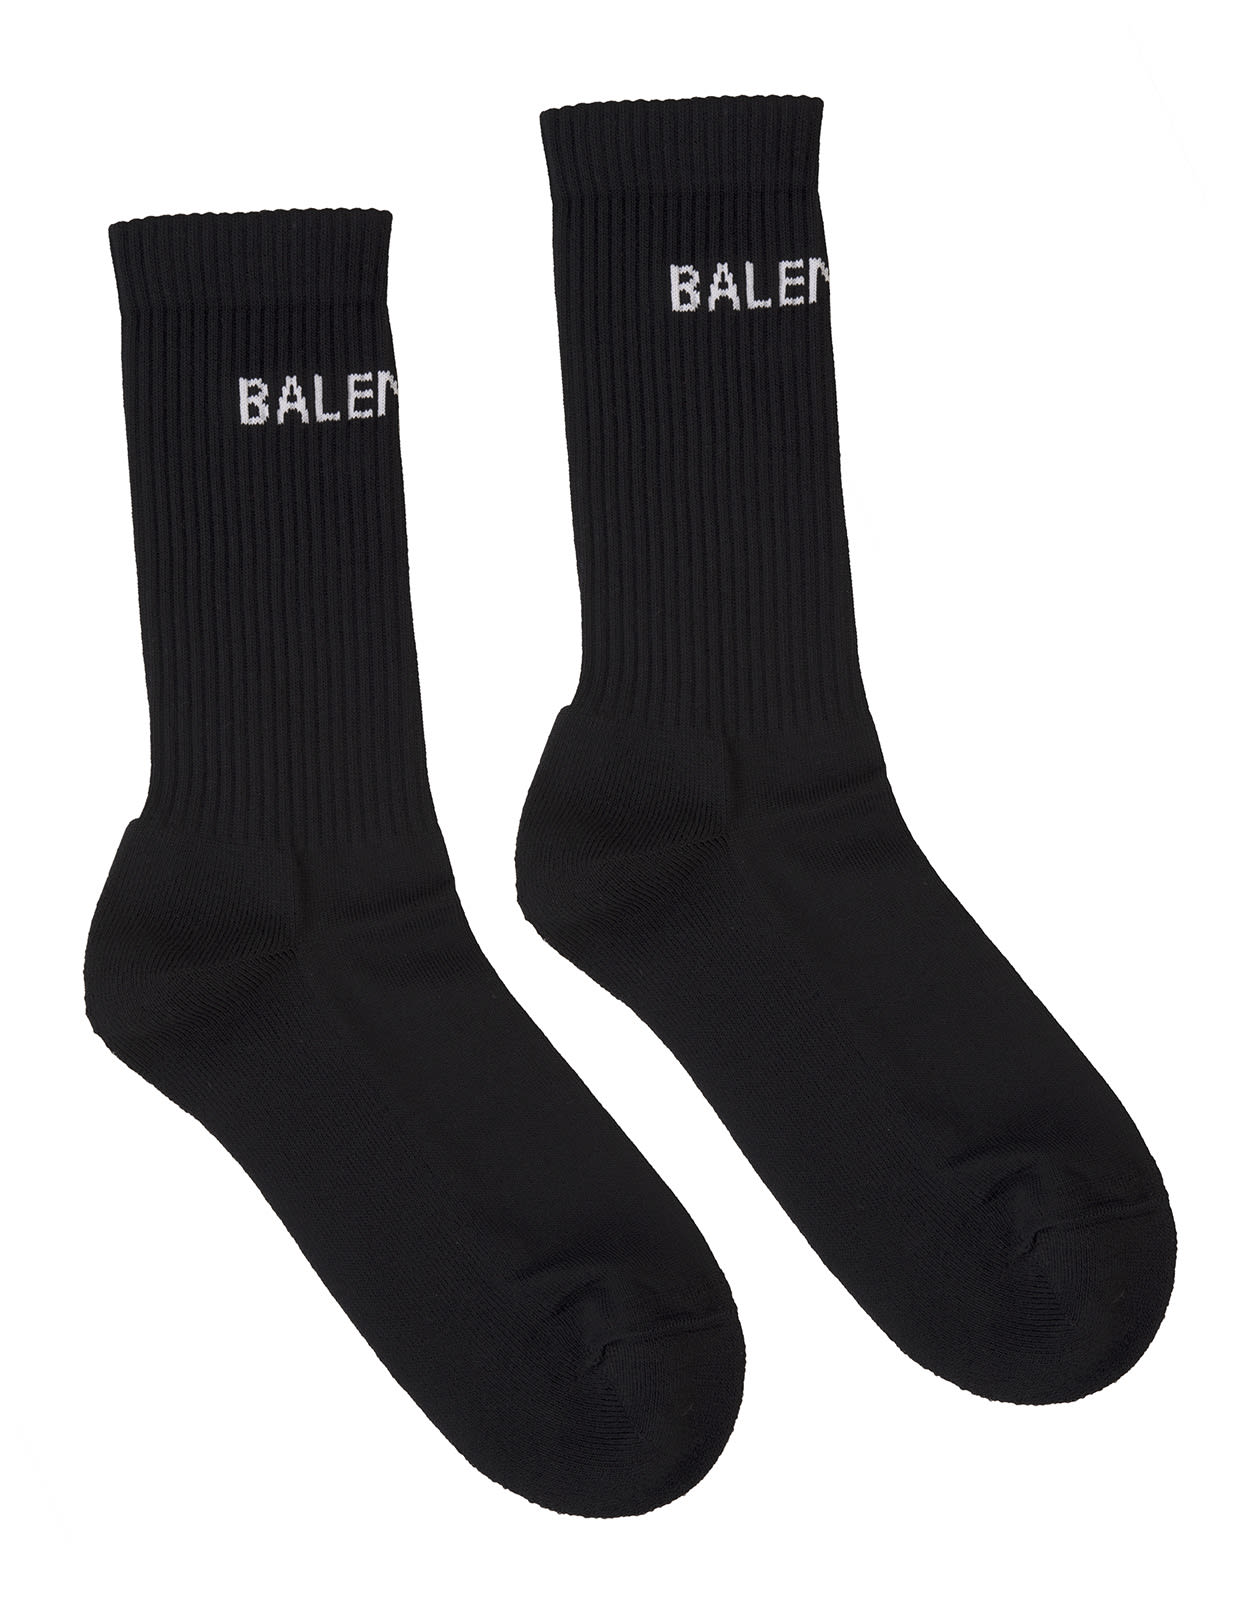 balenciaga socks black